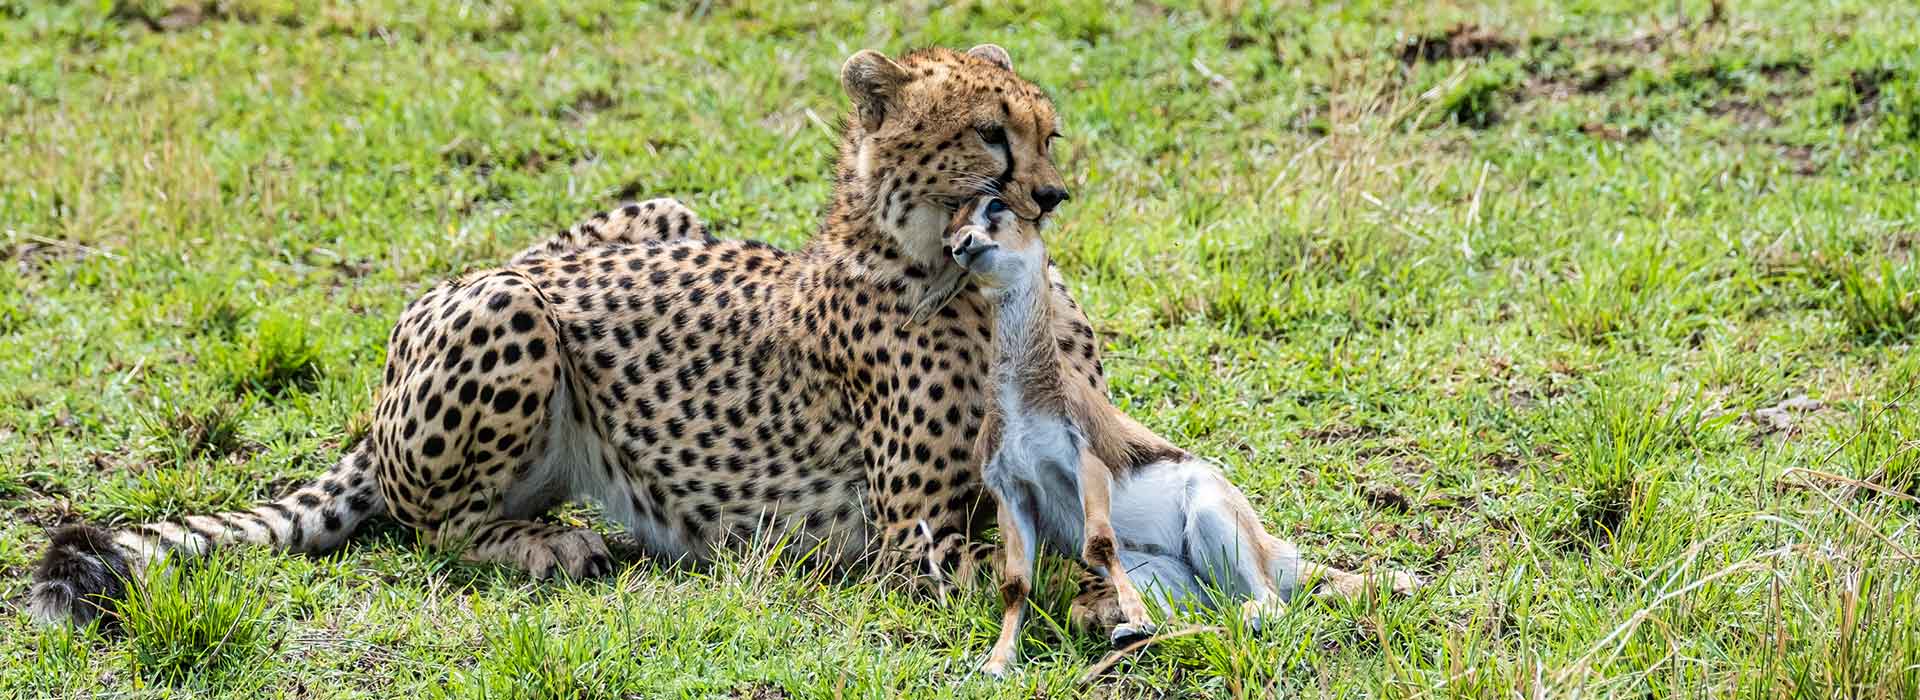 Kenia Nationalparks und Game Reserves